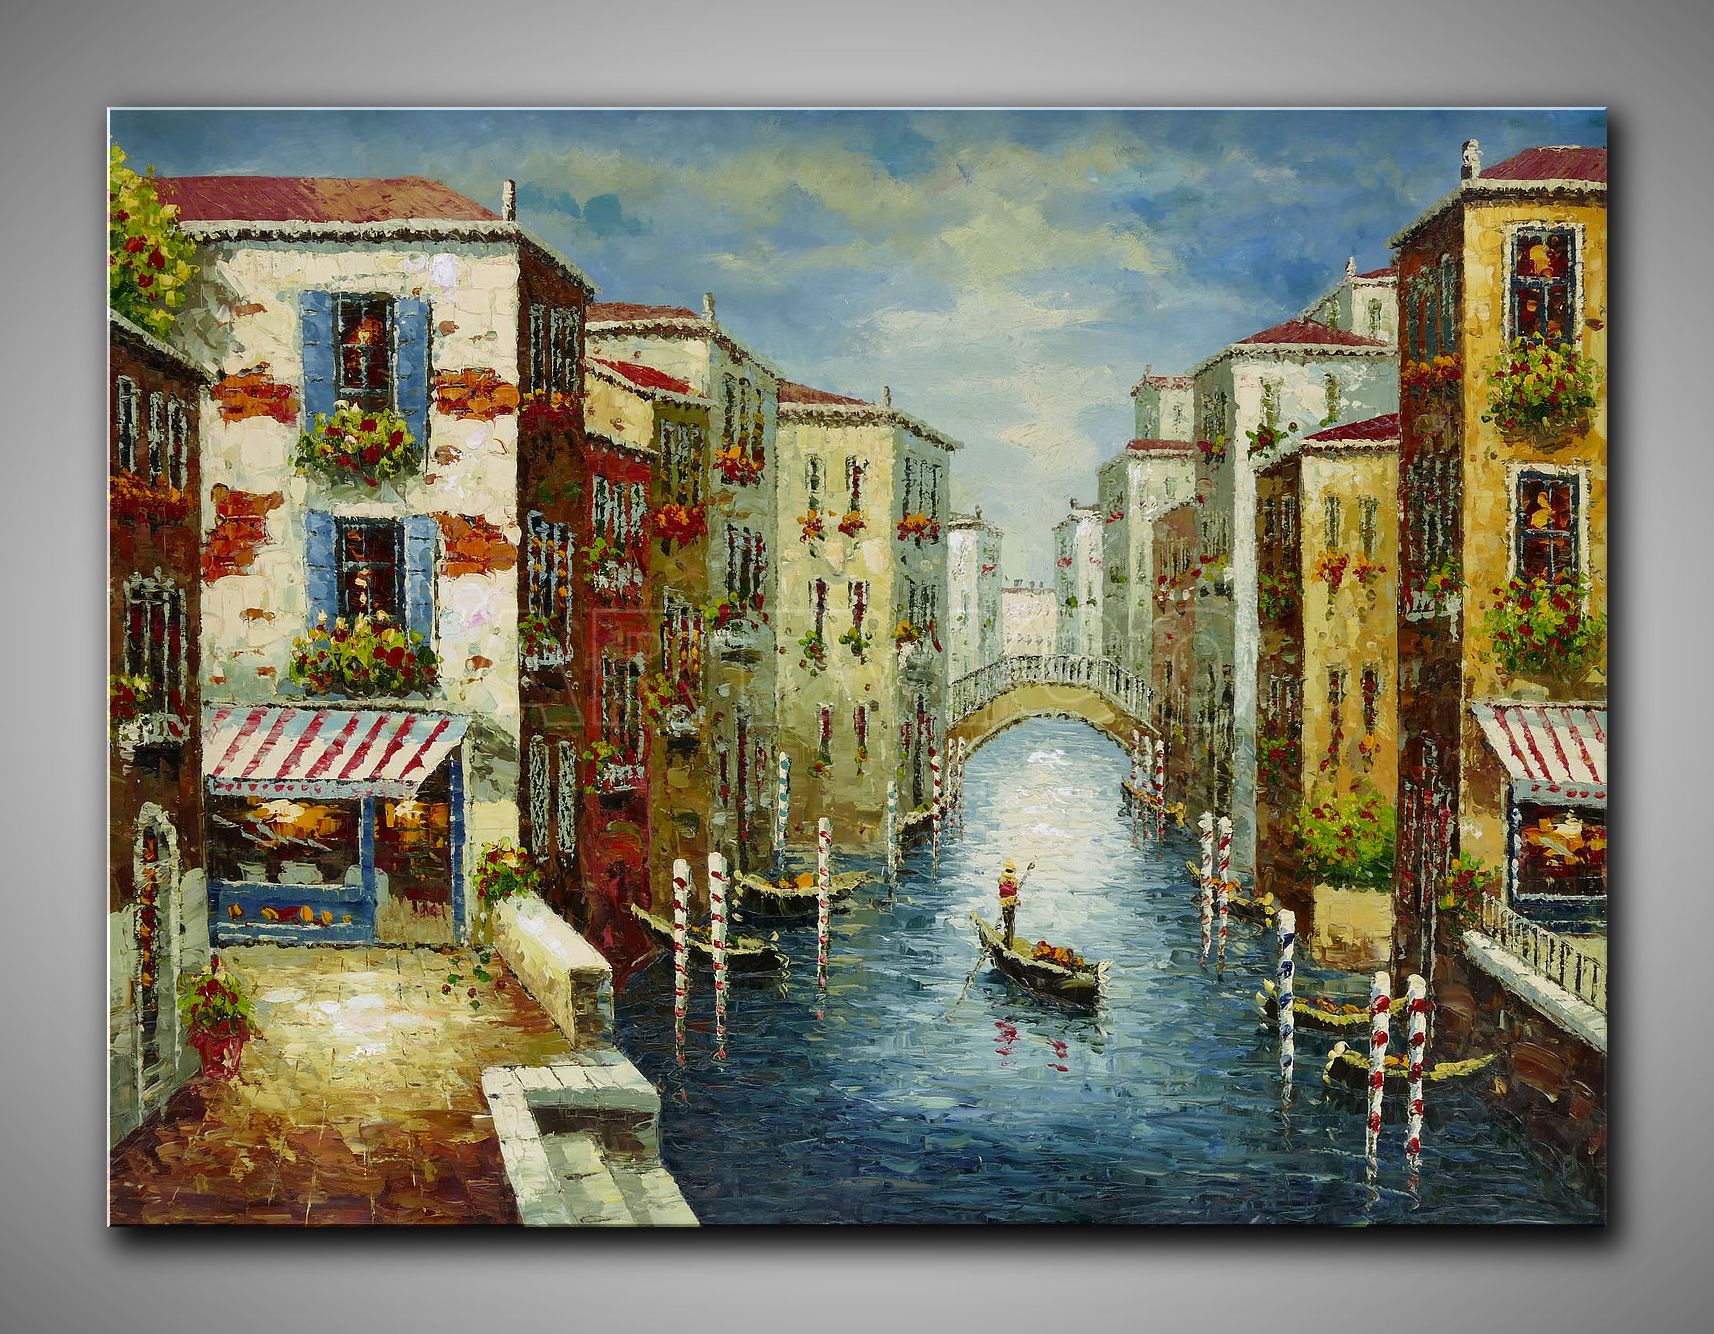 Alter Kanal in Venedig - Galerie, Gemälde Bilderrahmen Kunsthandlung